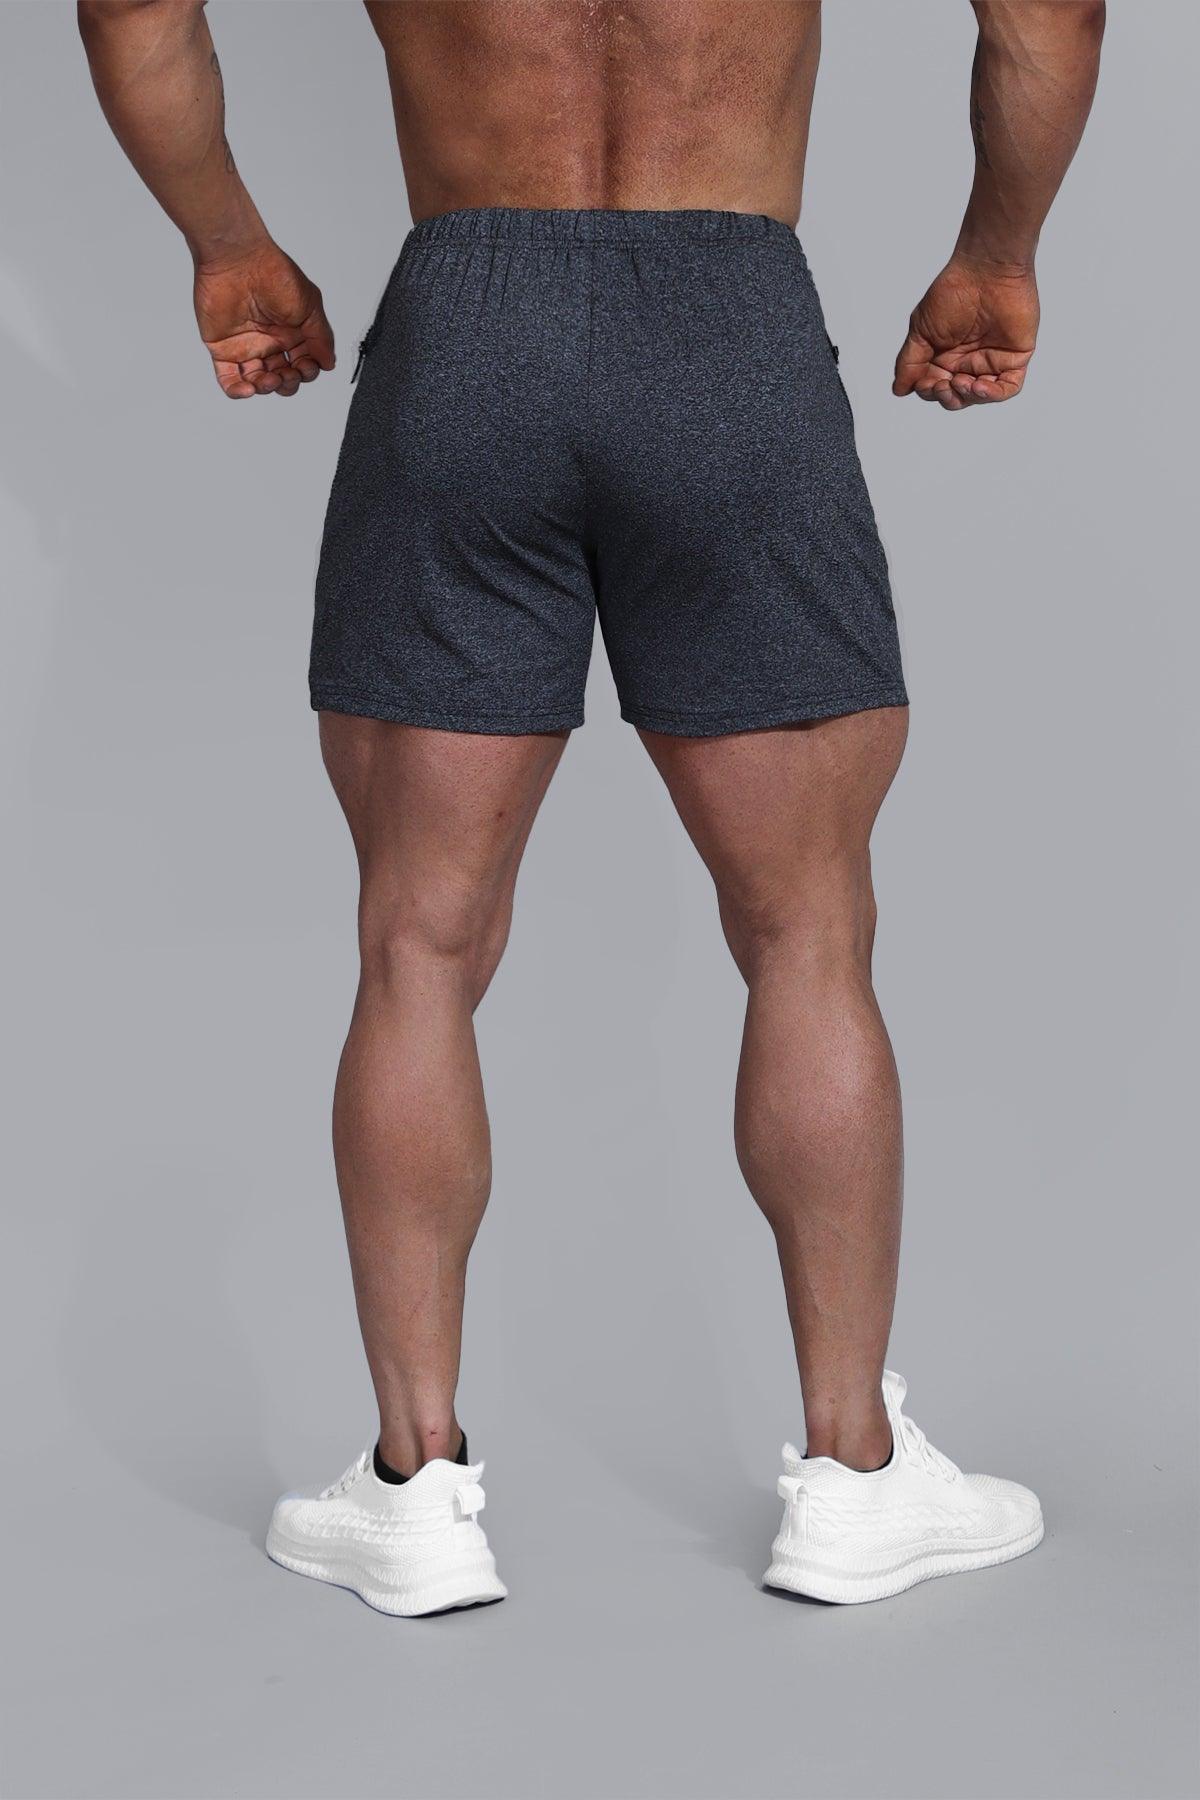 Agile Bodybuilding 4'' Shorts w Zipper Pockets - Green